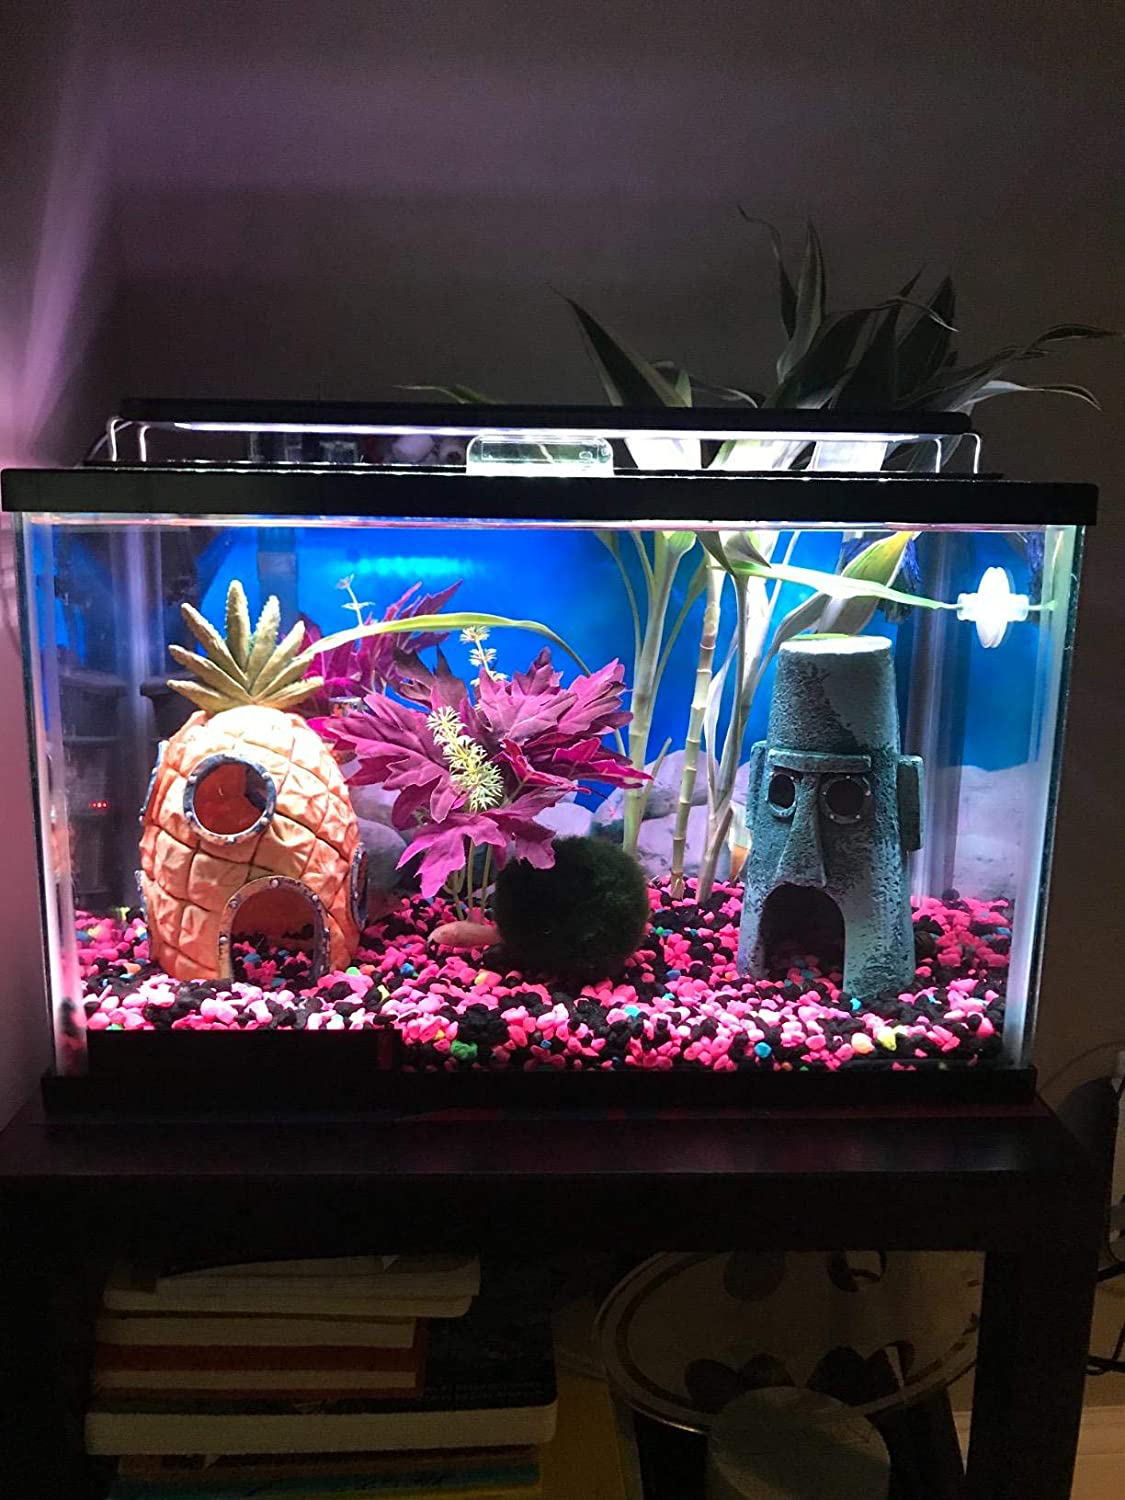 Bonlux RGB LED Aquarium Light - Color Changing LED Fish Tank Hood Light with Extendable Brackets, Dimmable RGB LED Light for Freshwater Saltwater Marine Full Spectrum Light